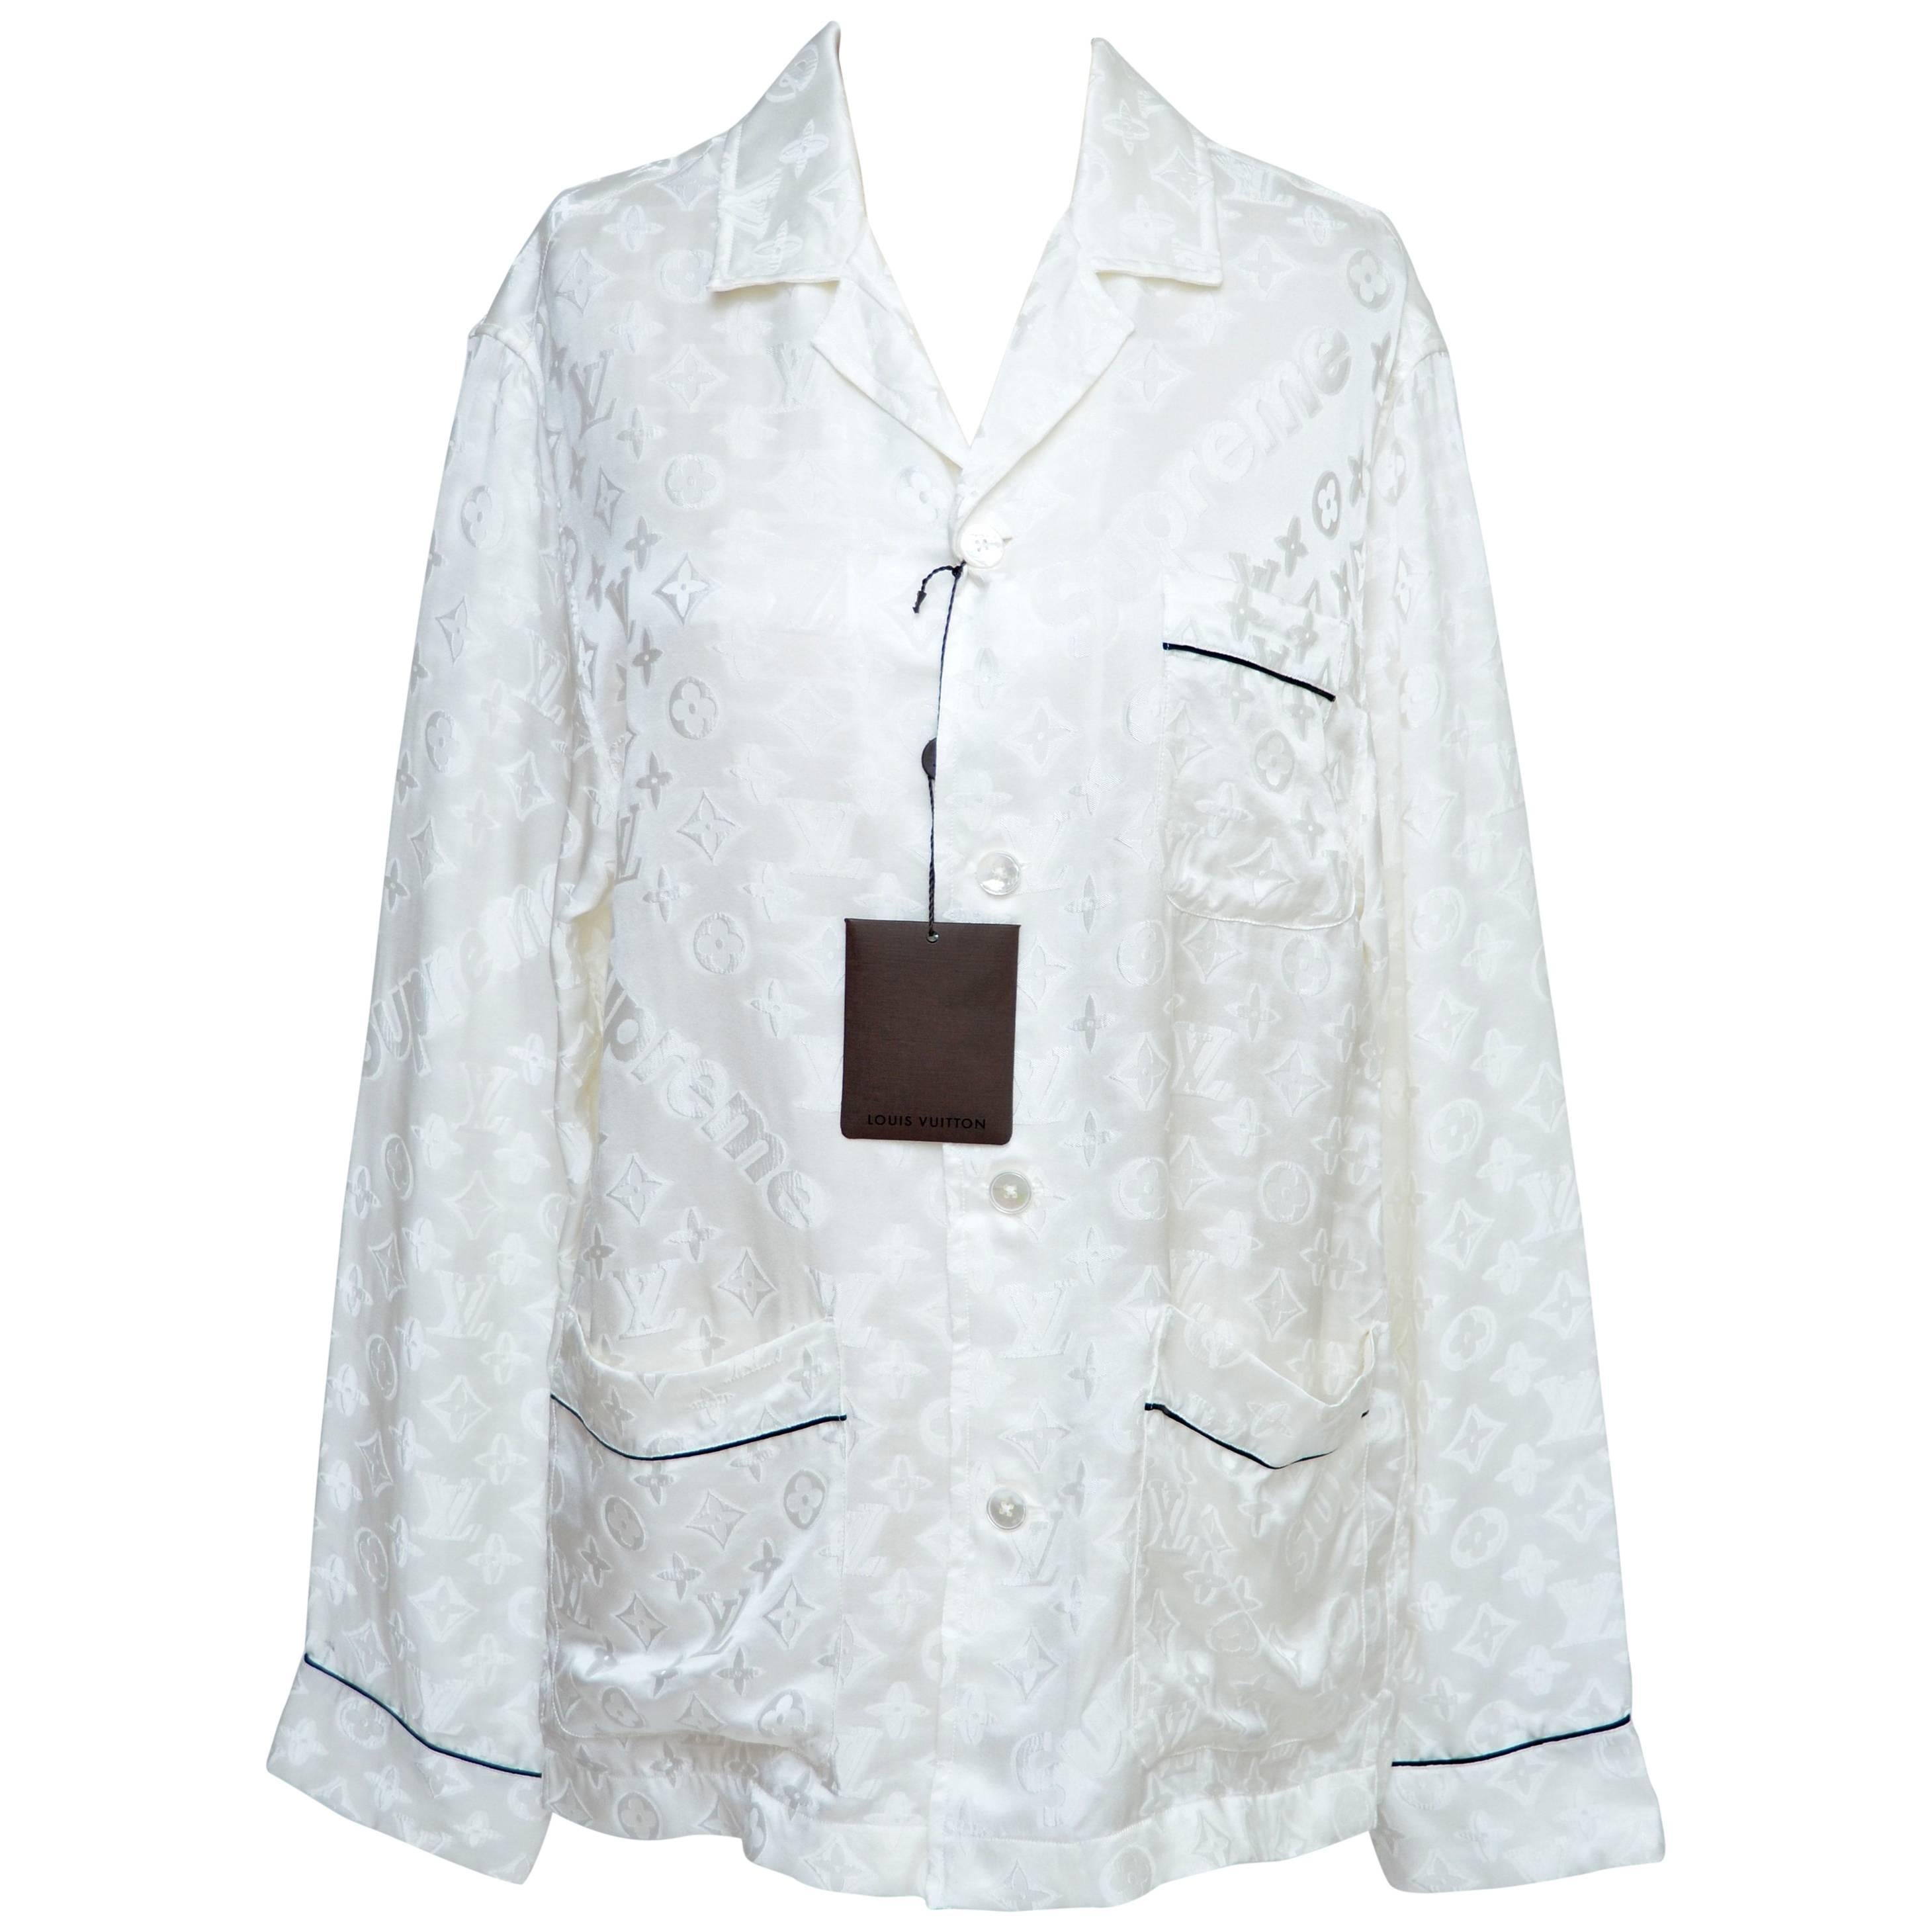 LOUIS VUITTON X Grace Coddington Catogram Silk Shirt Size 40 New